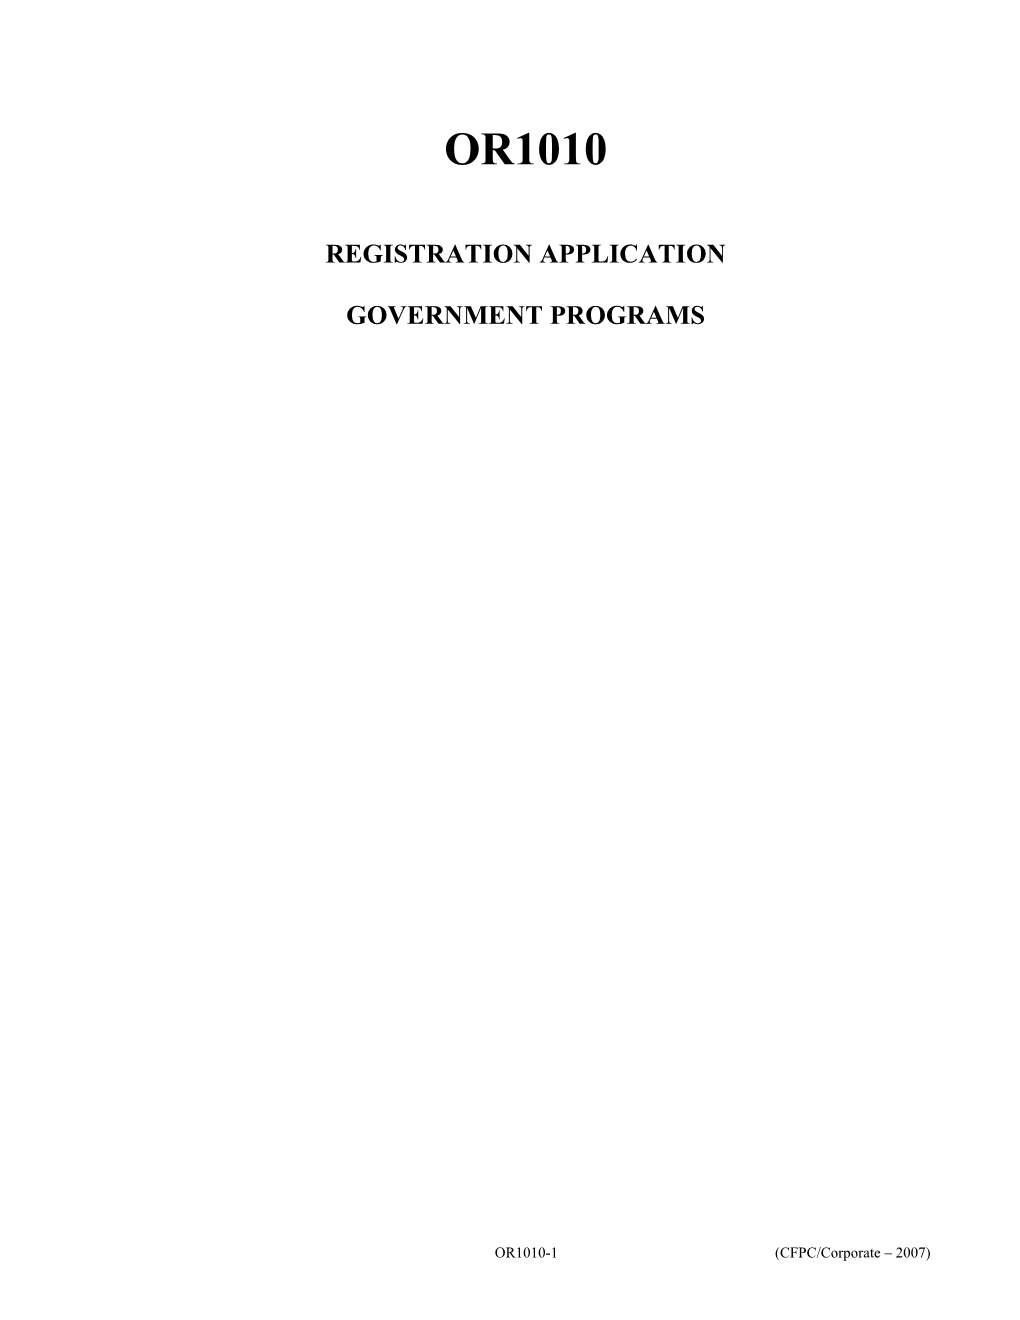 Or1010 - Registration Application Government Programs